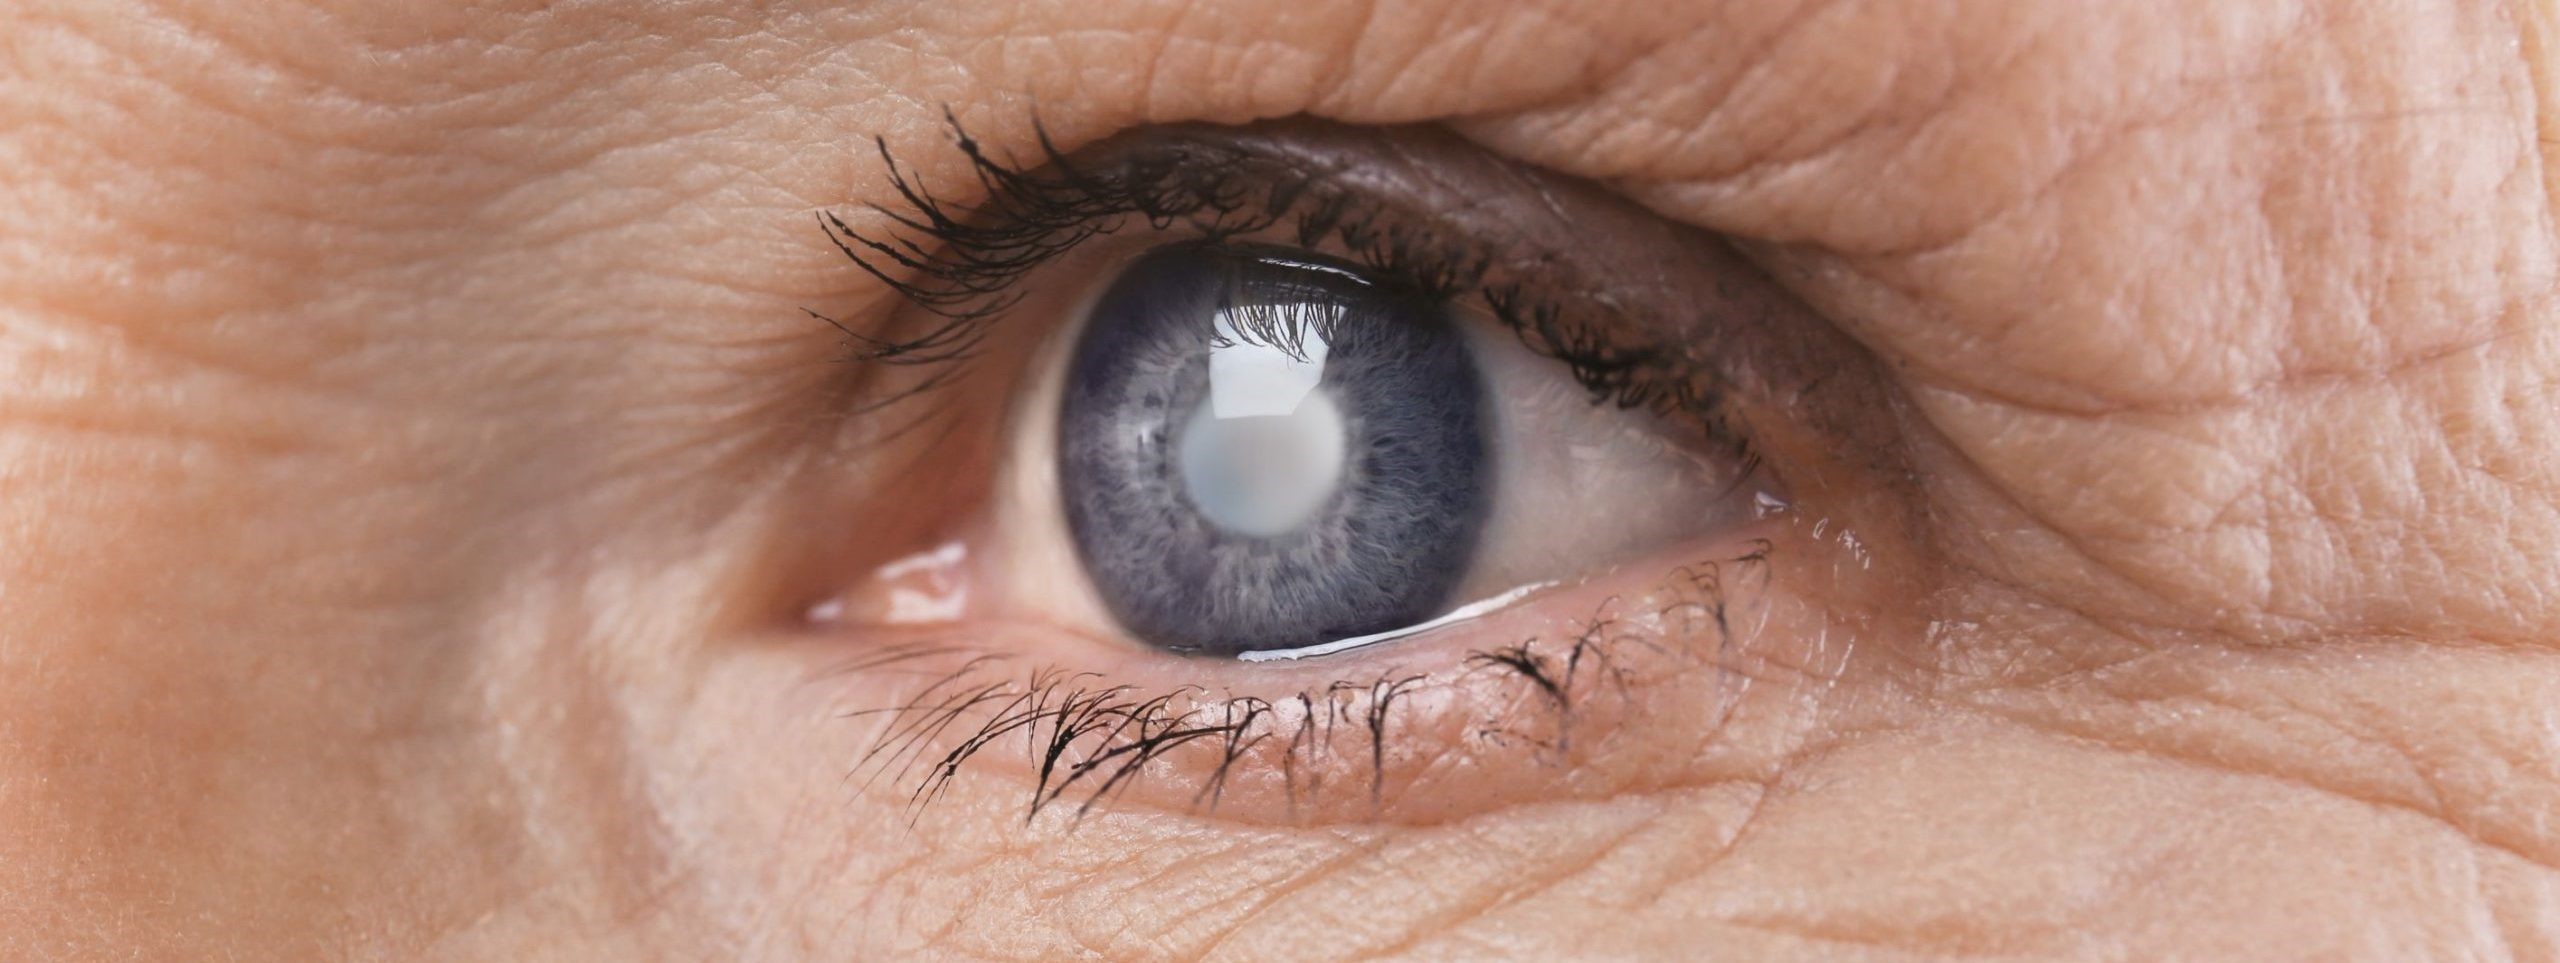 Причины катаракты